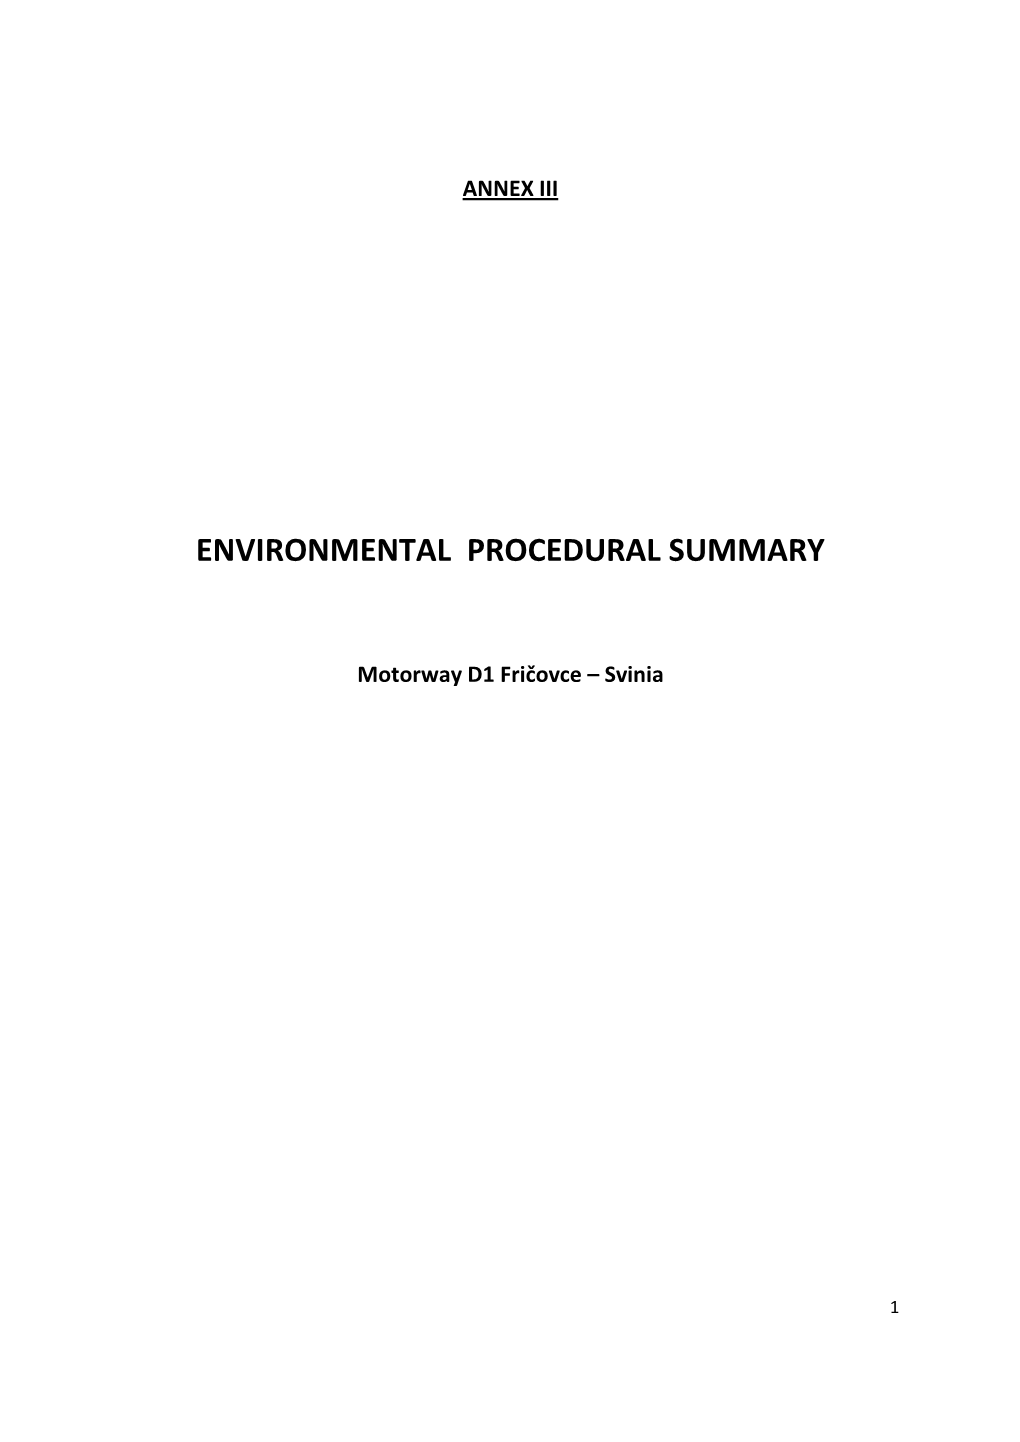 Environmental Procedural Summary